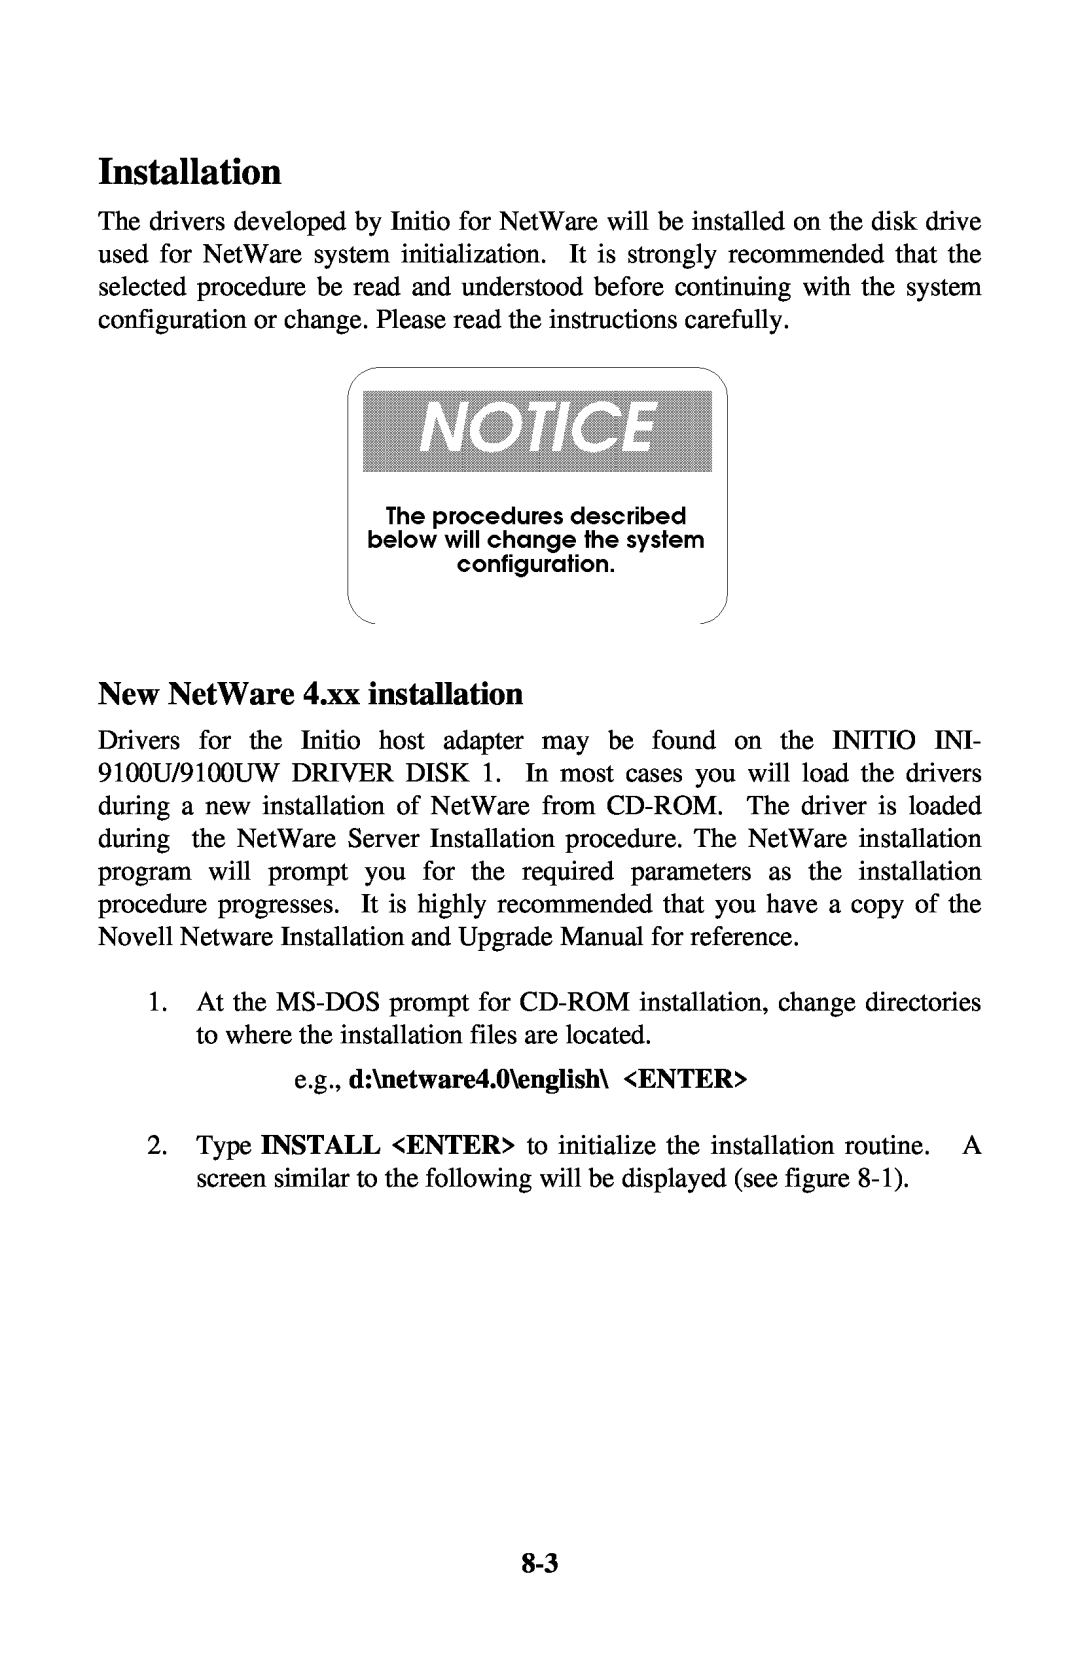 Initio INI-9100UW user manual New NetWare 4.xx installation, e.g., d\netware4.0\english\ ENTER, Installation 